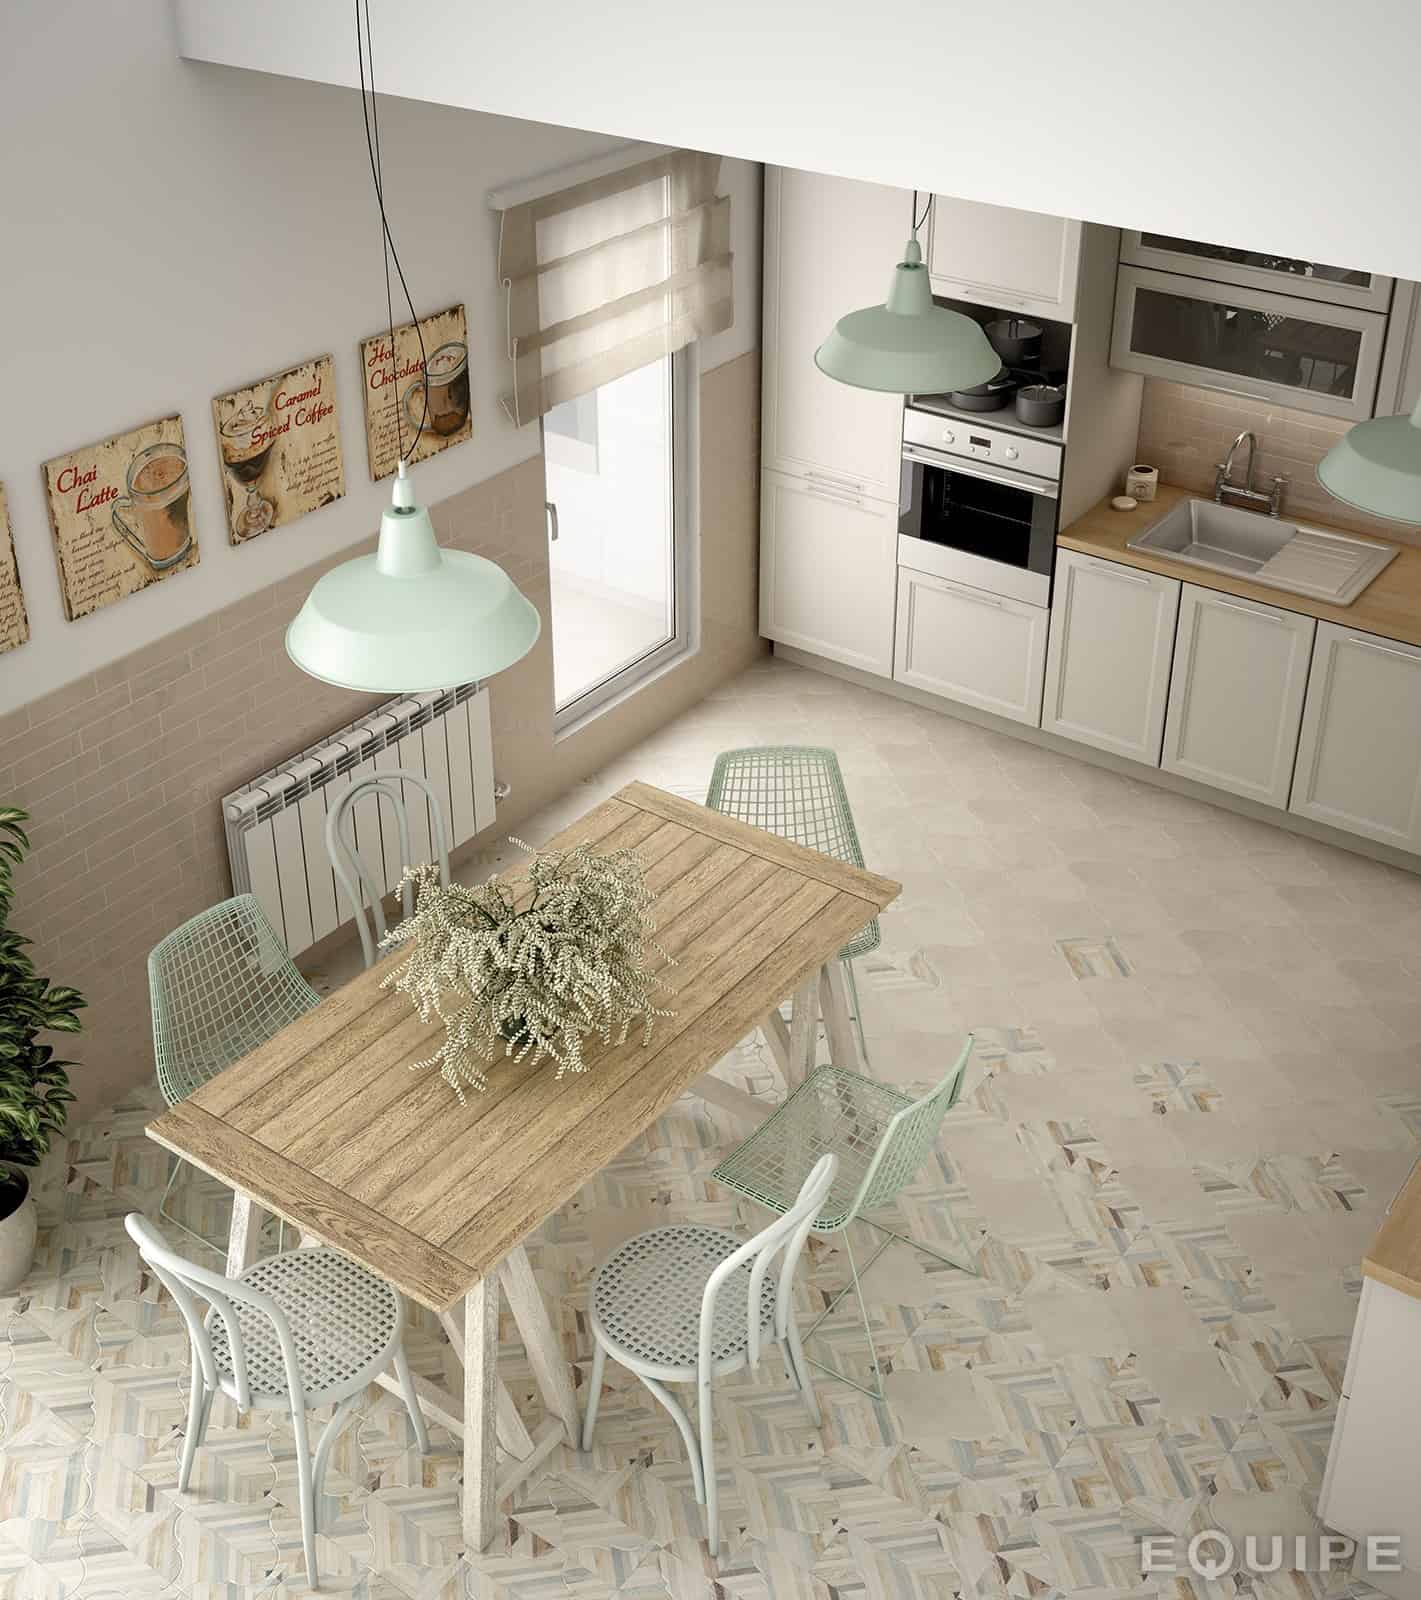 arabesque tile mix and match kitchen floor equipe 18